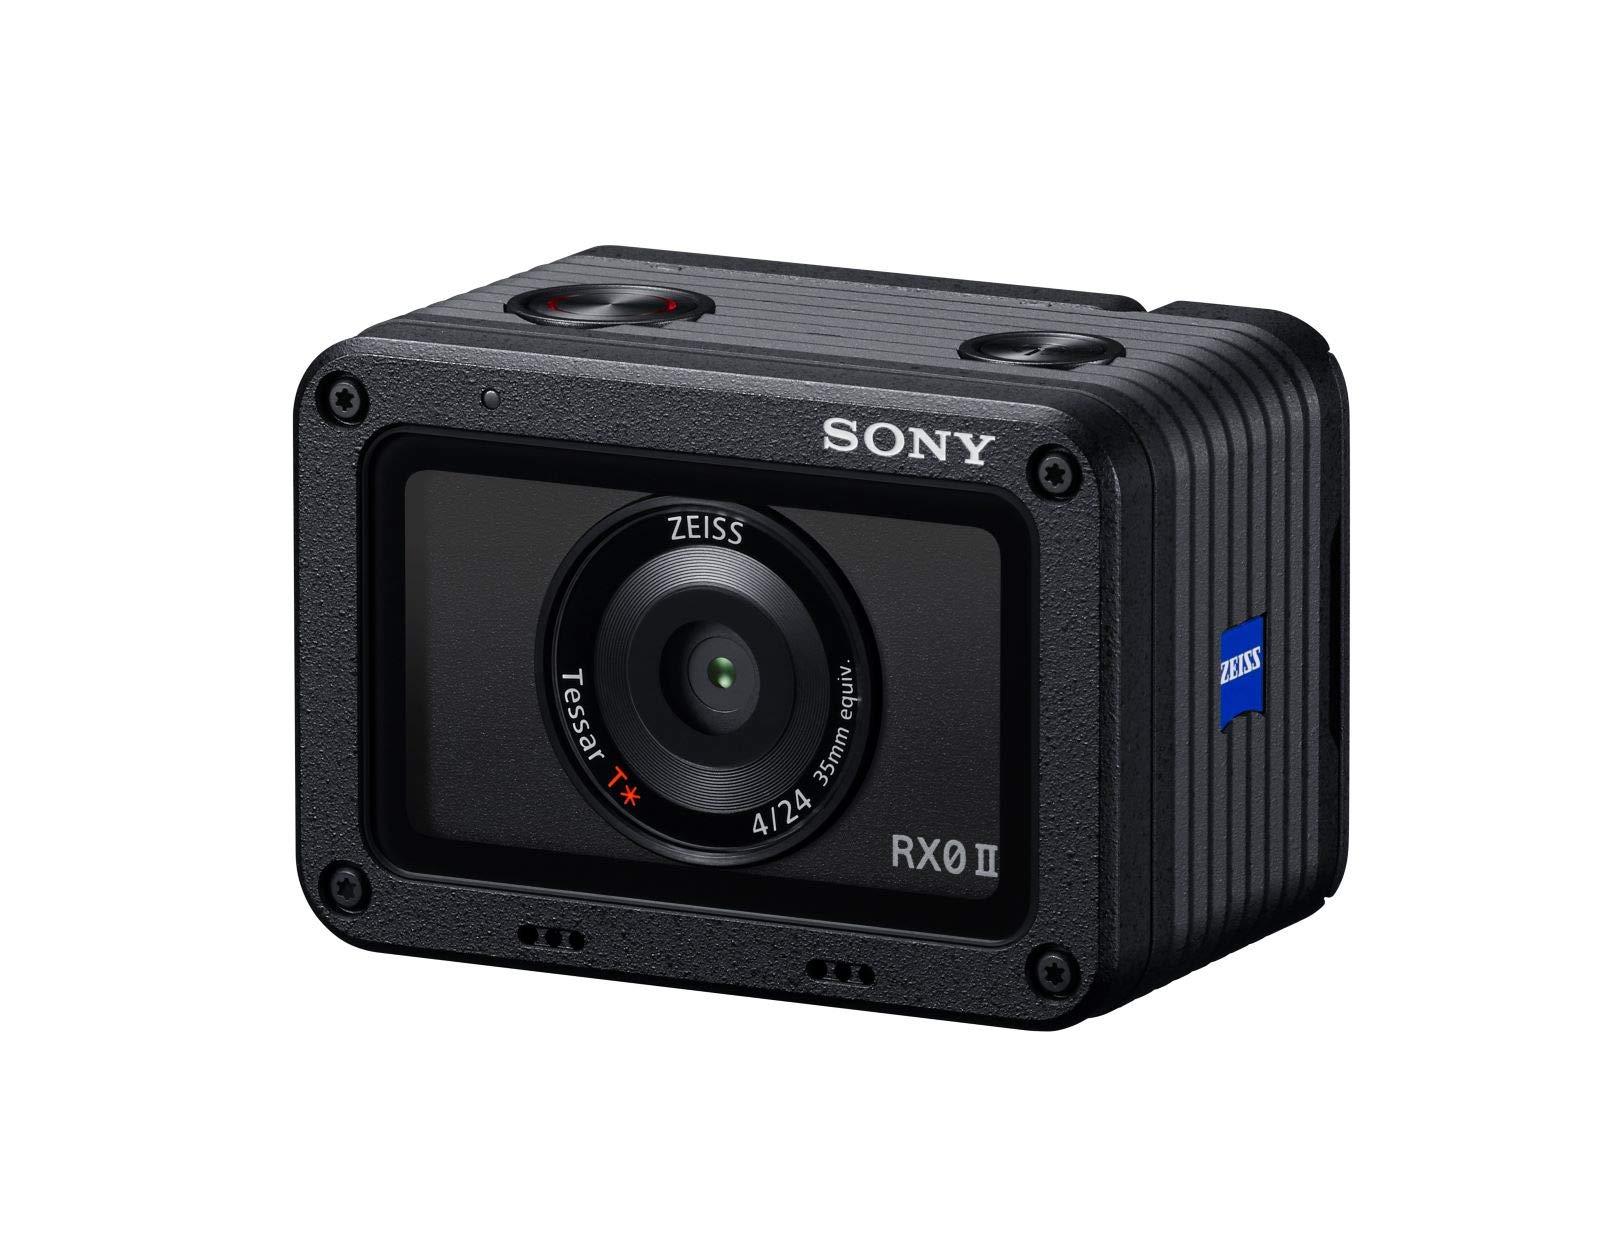 Sony RX0 II 1? (1.0-type) Sensor Ultra-Compact Camera